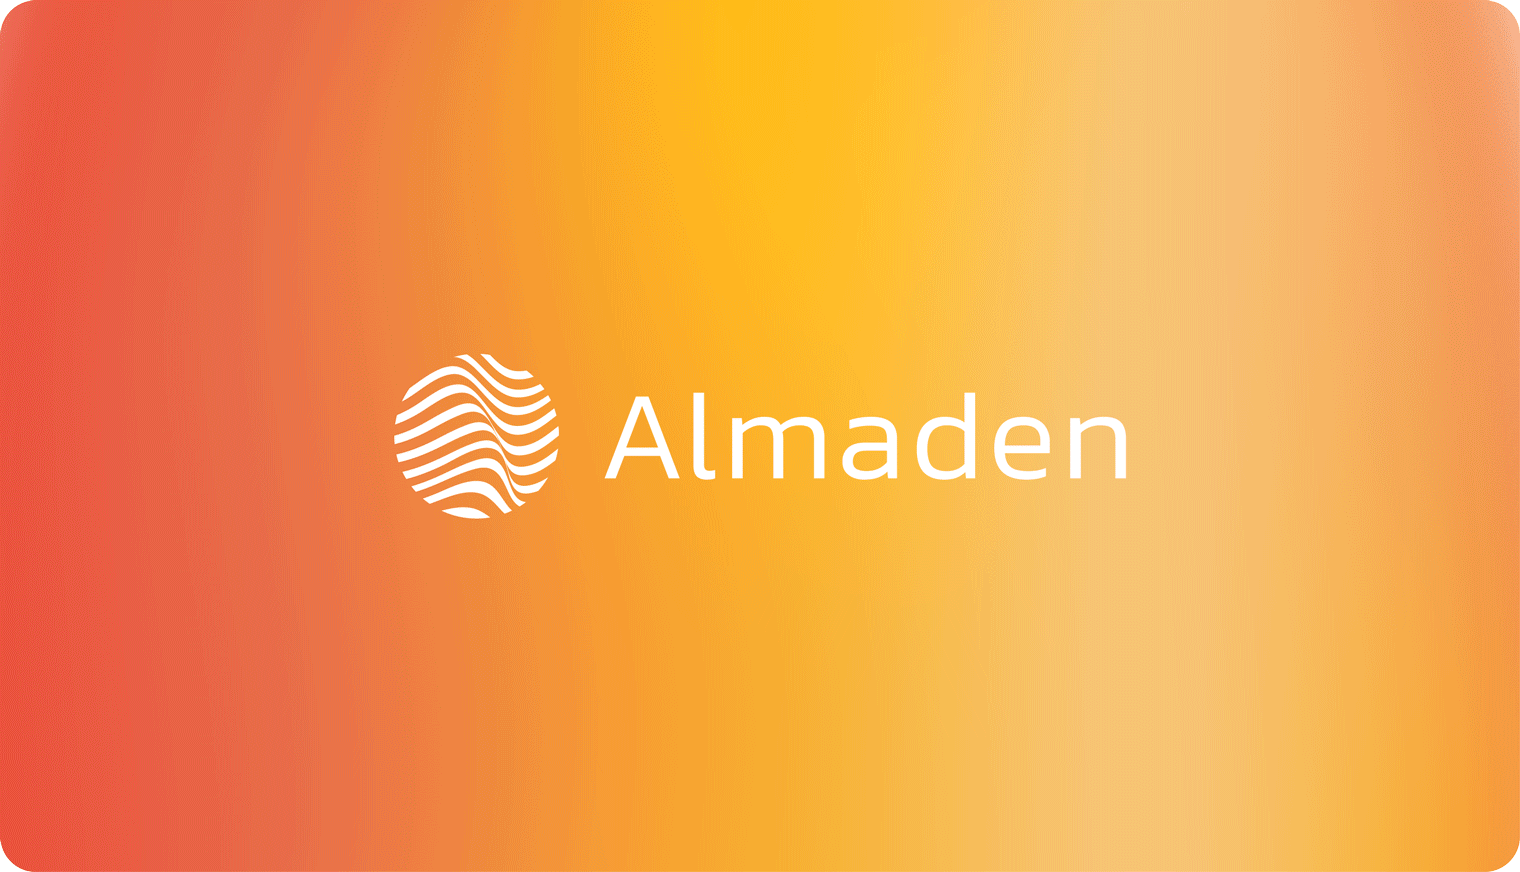 almaden energy logo animation